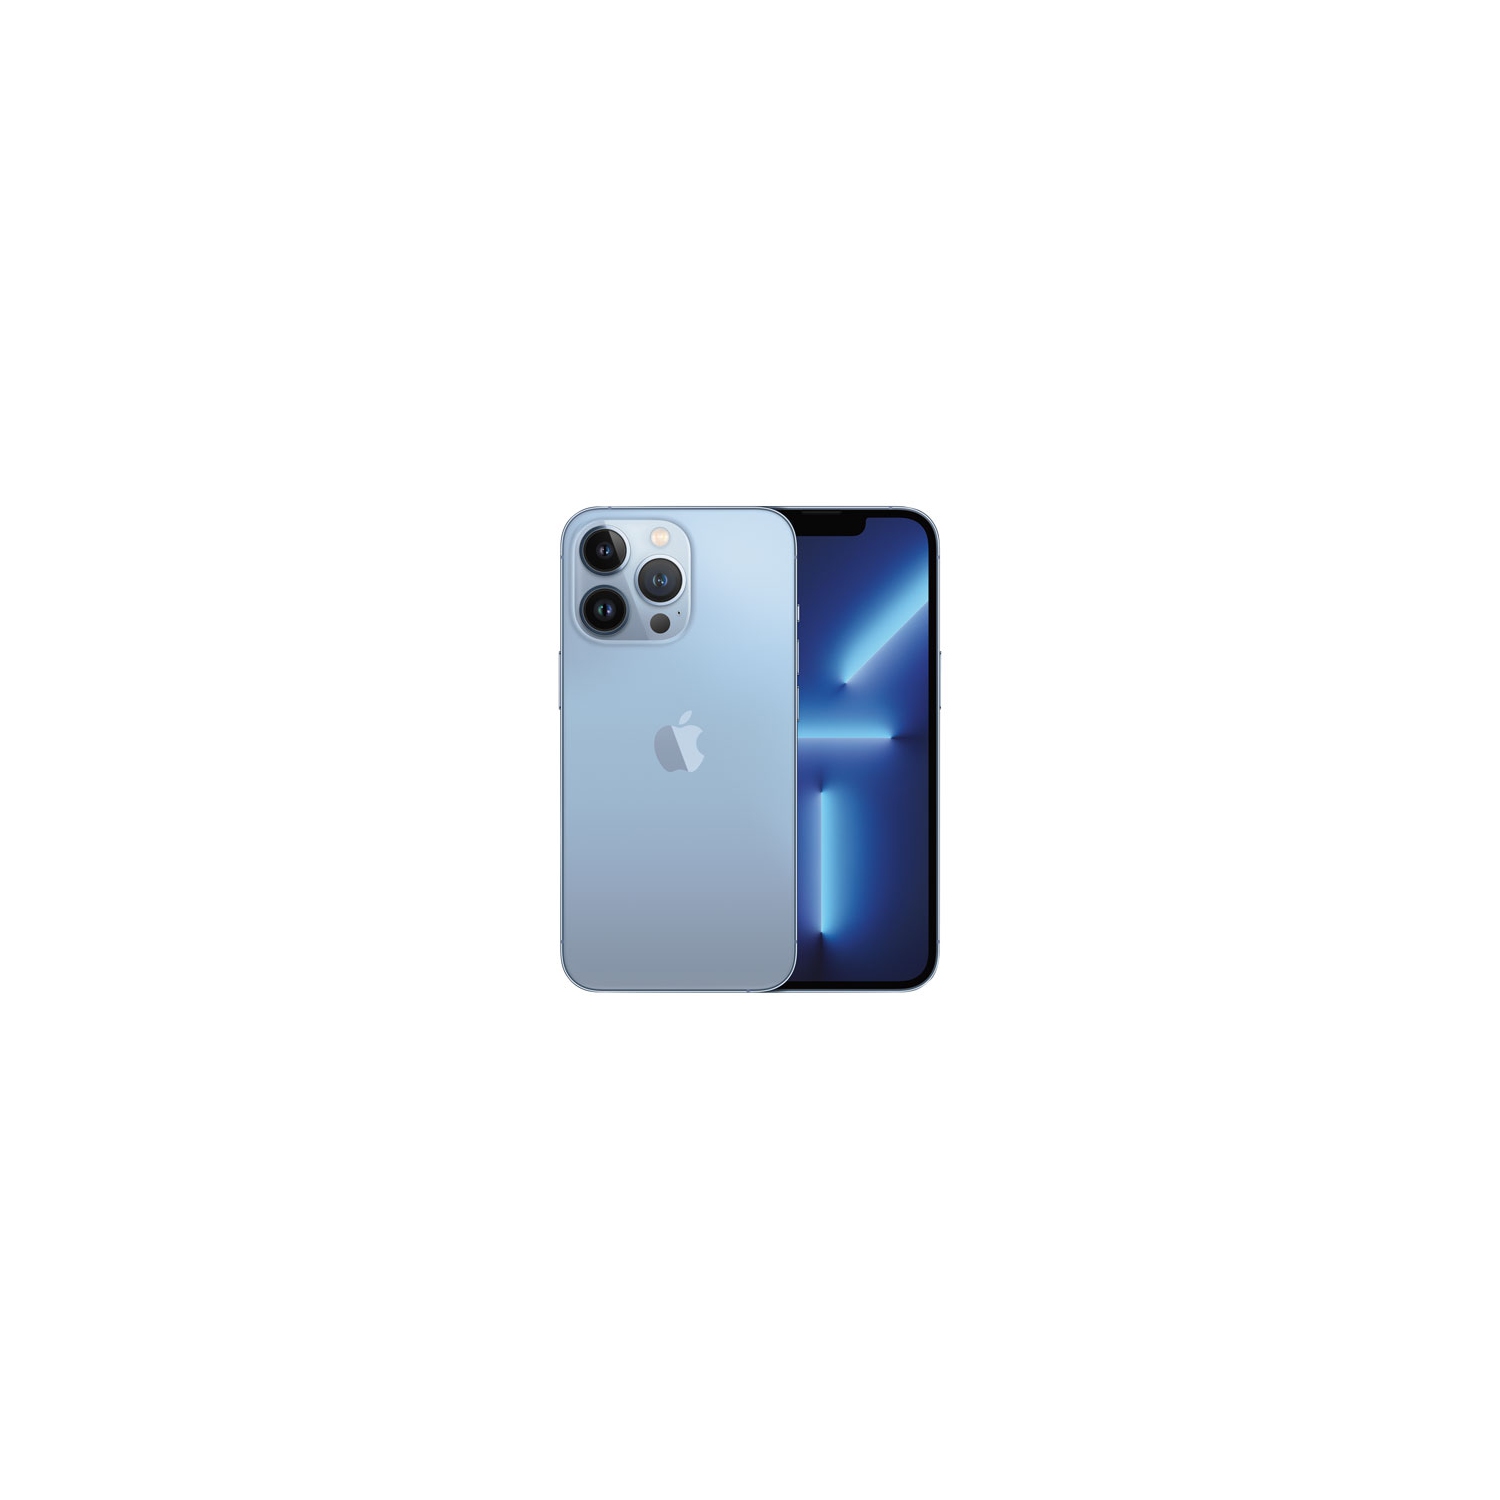 Apple iPhone 13 Pro 128GB - Sierra Blue - Unlocked - Certified Pre-Owned